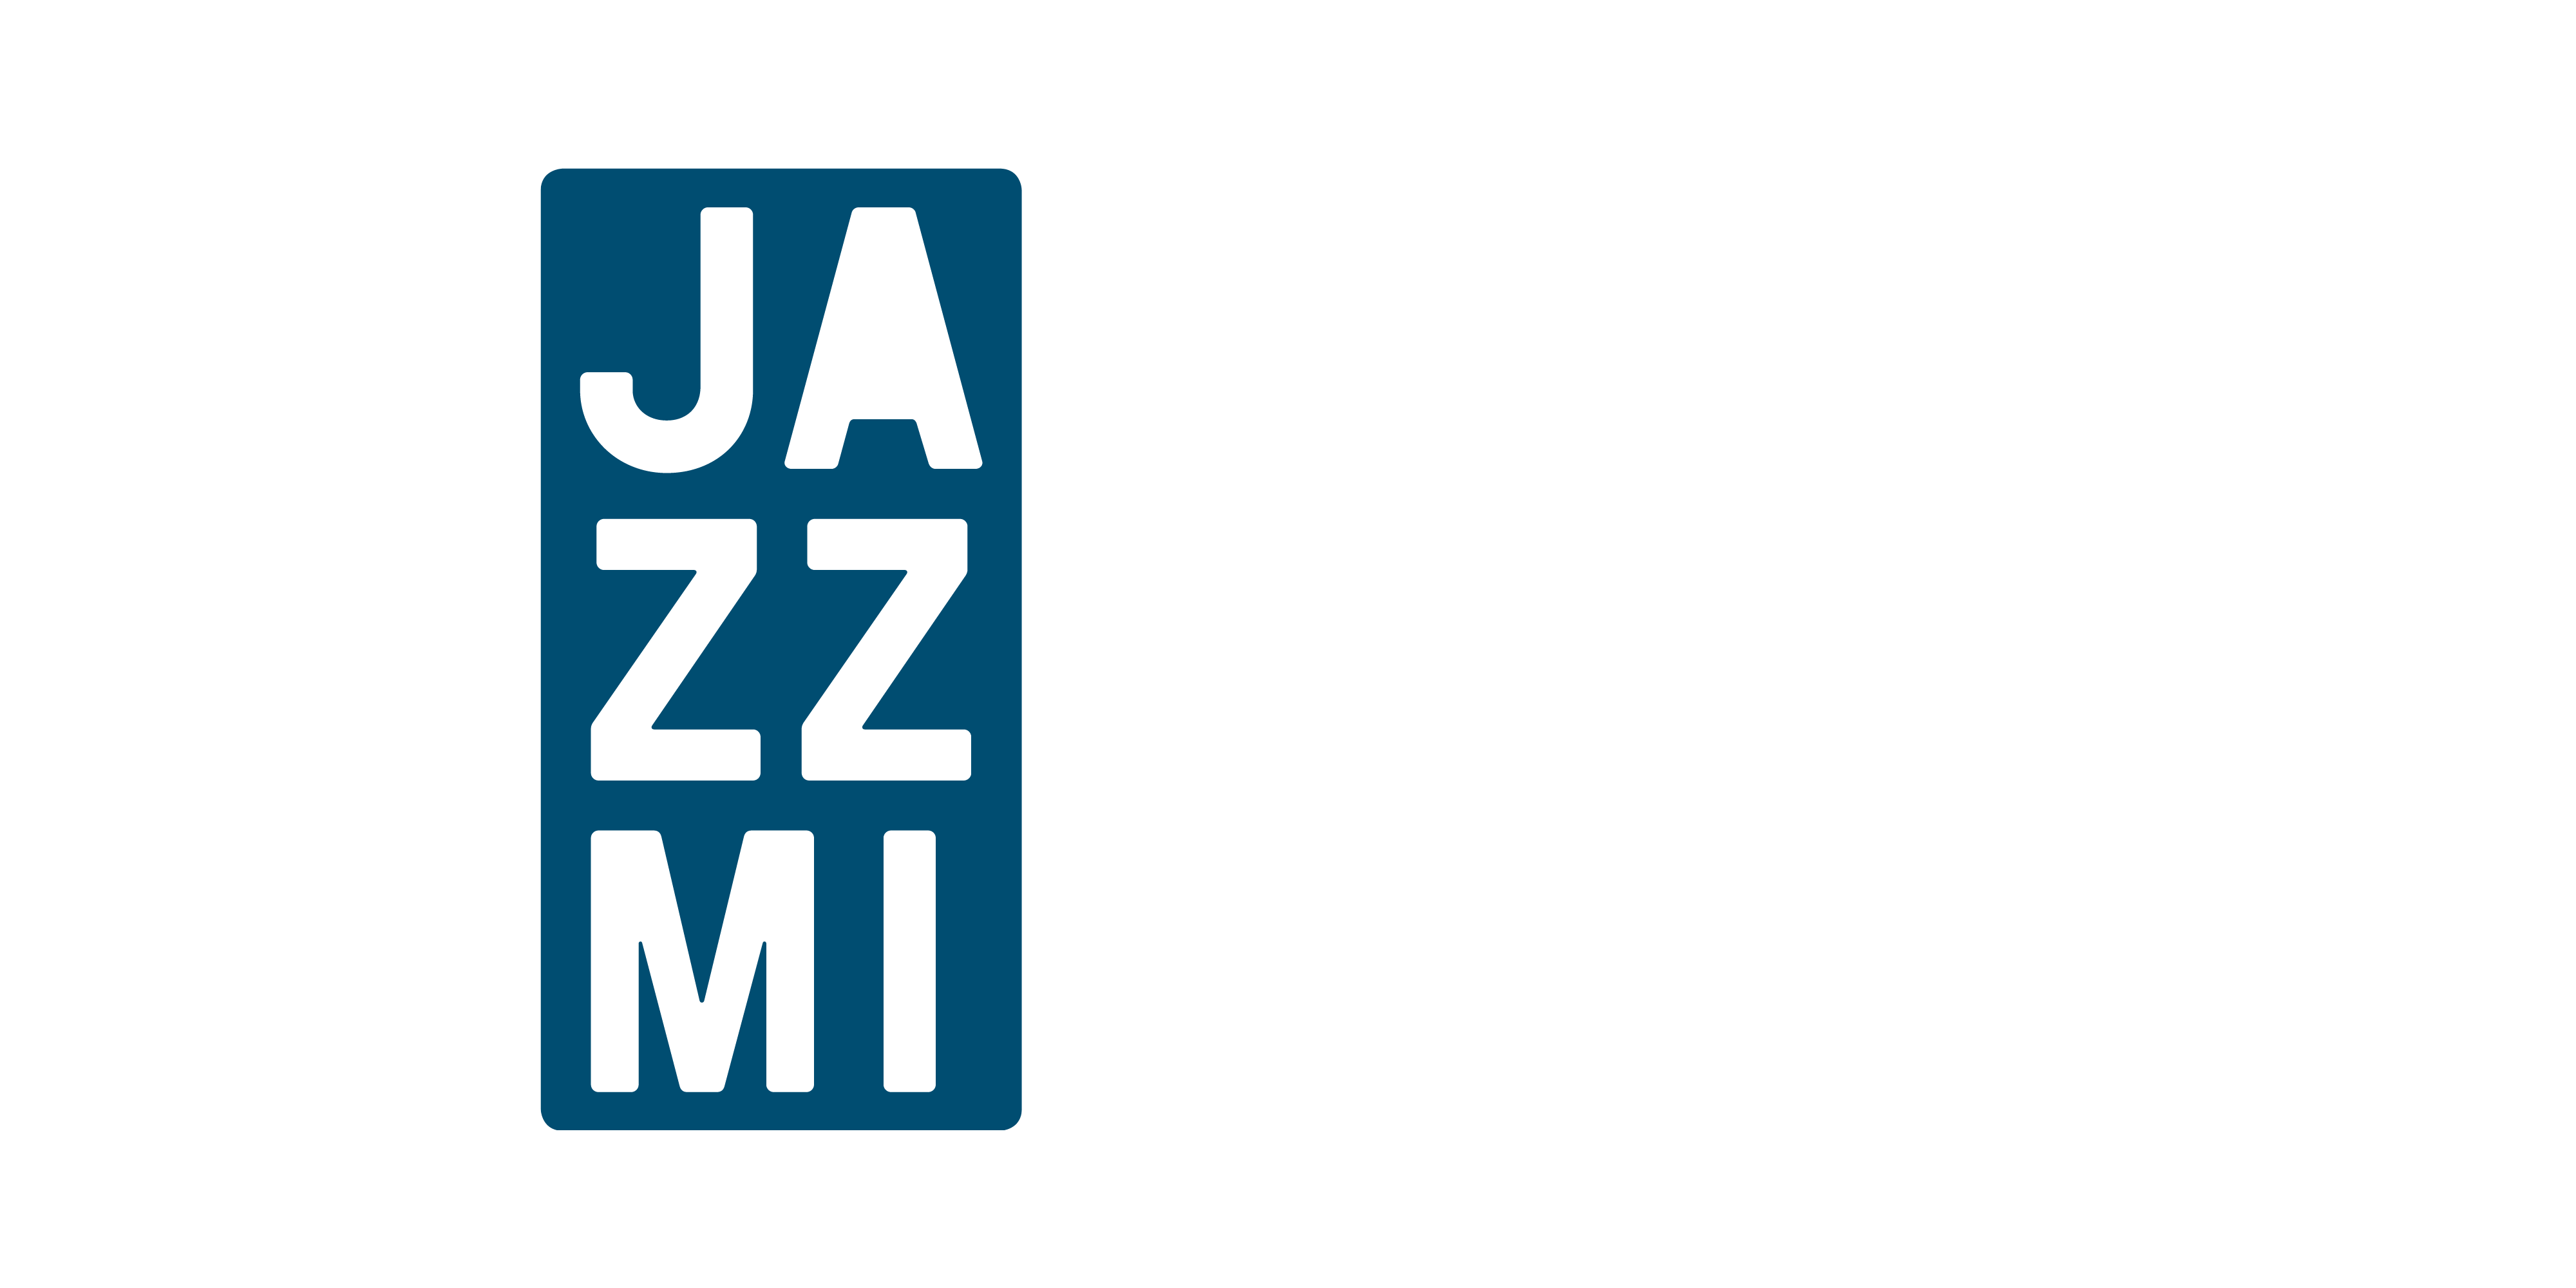 Paolo Fresu al MUBA